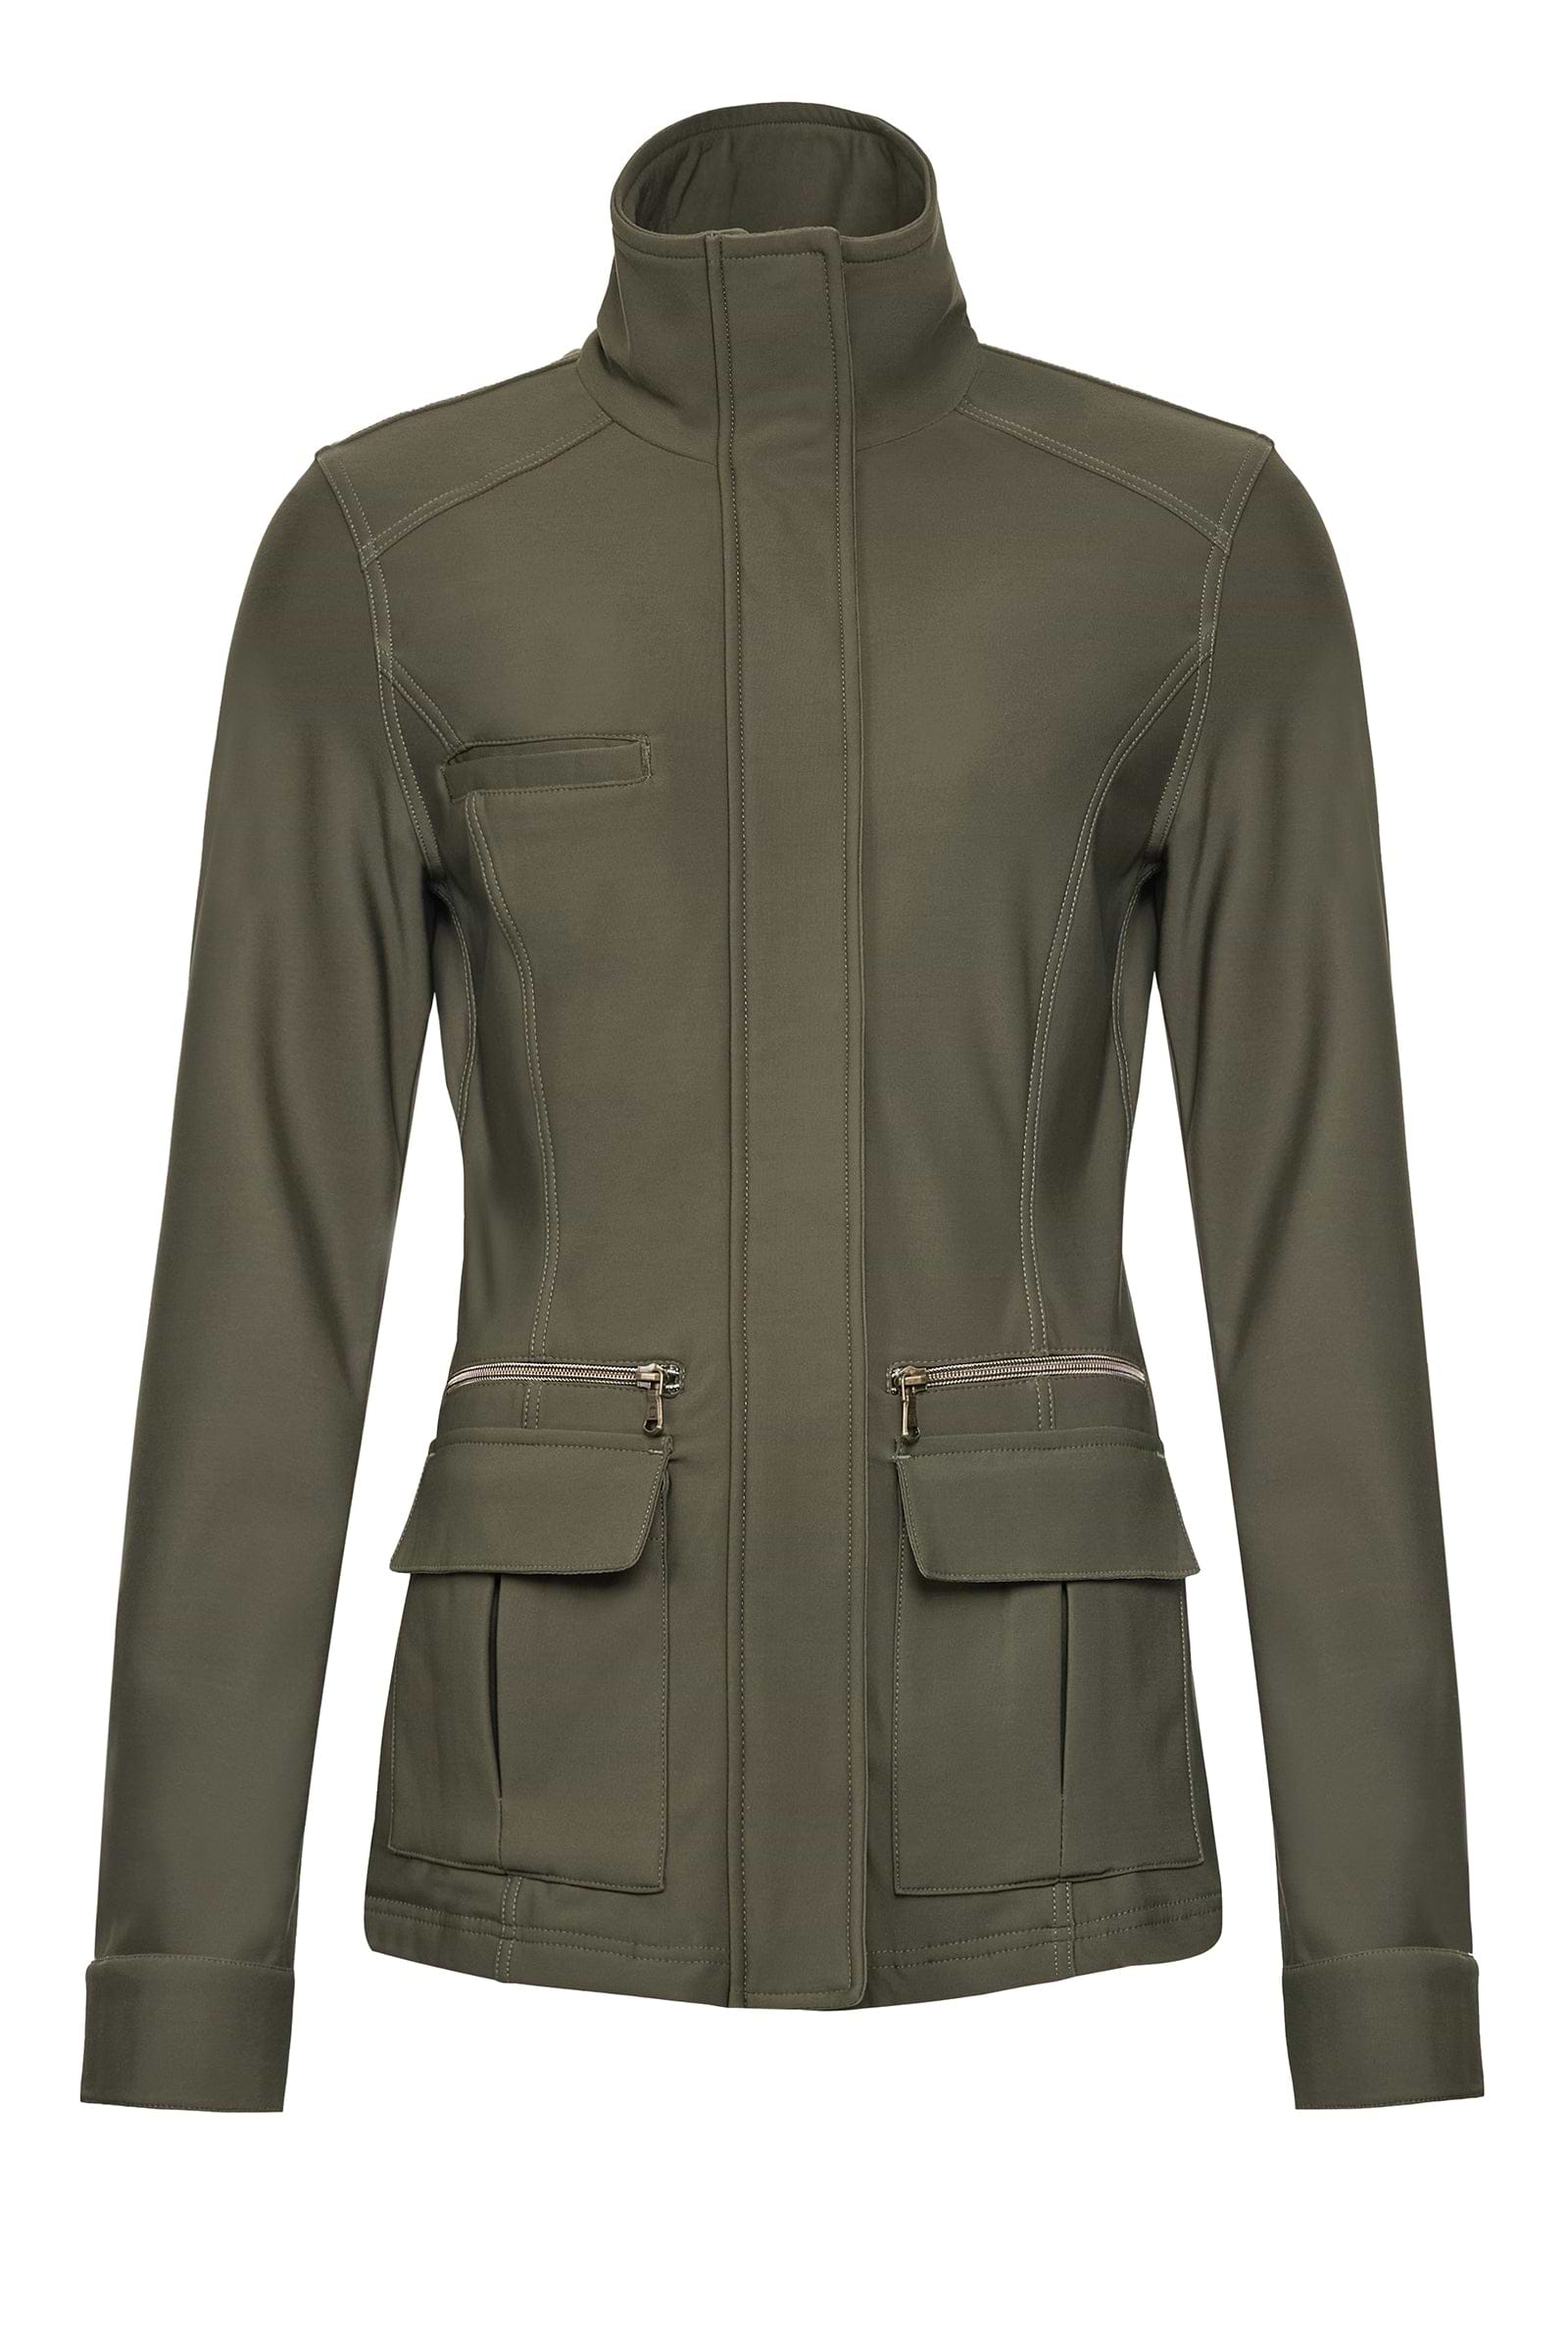 Kenya Fleece - Lined Jacket, Softshell Clothes